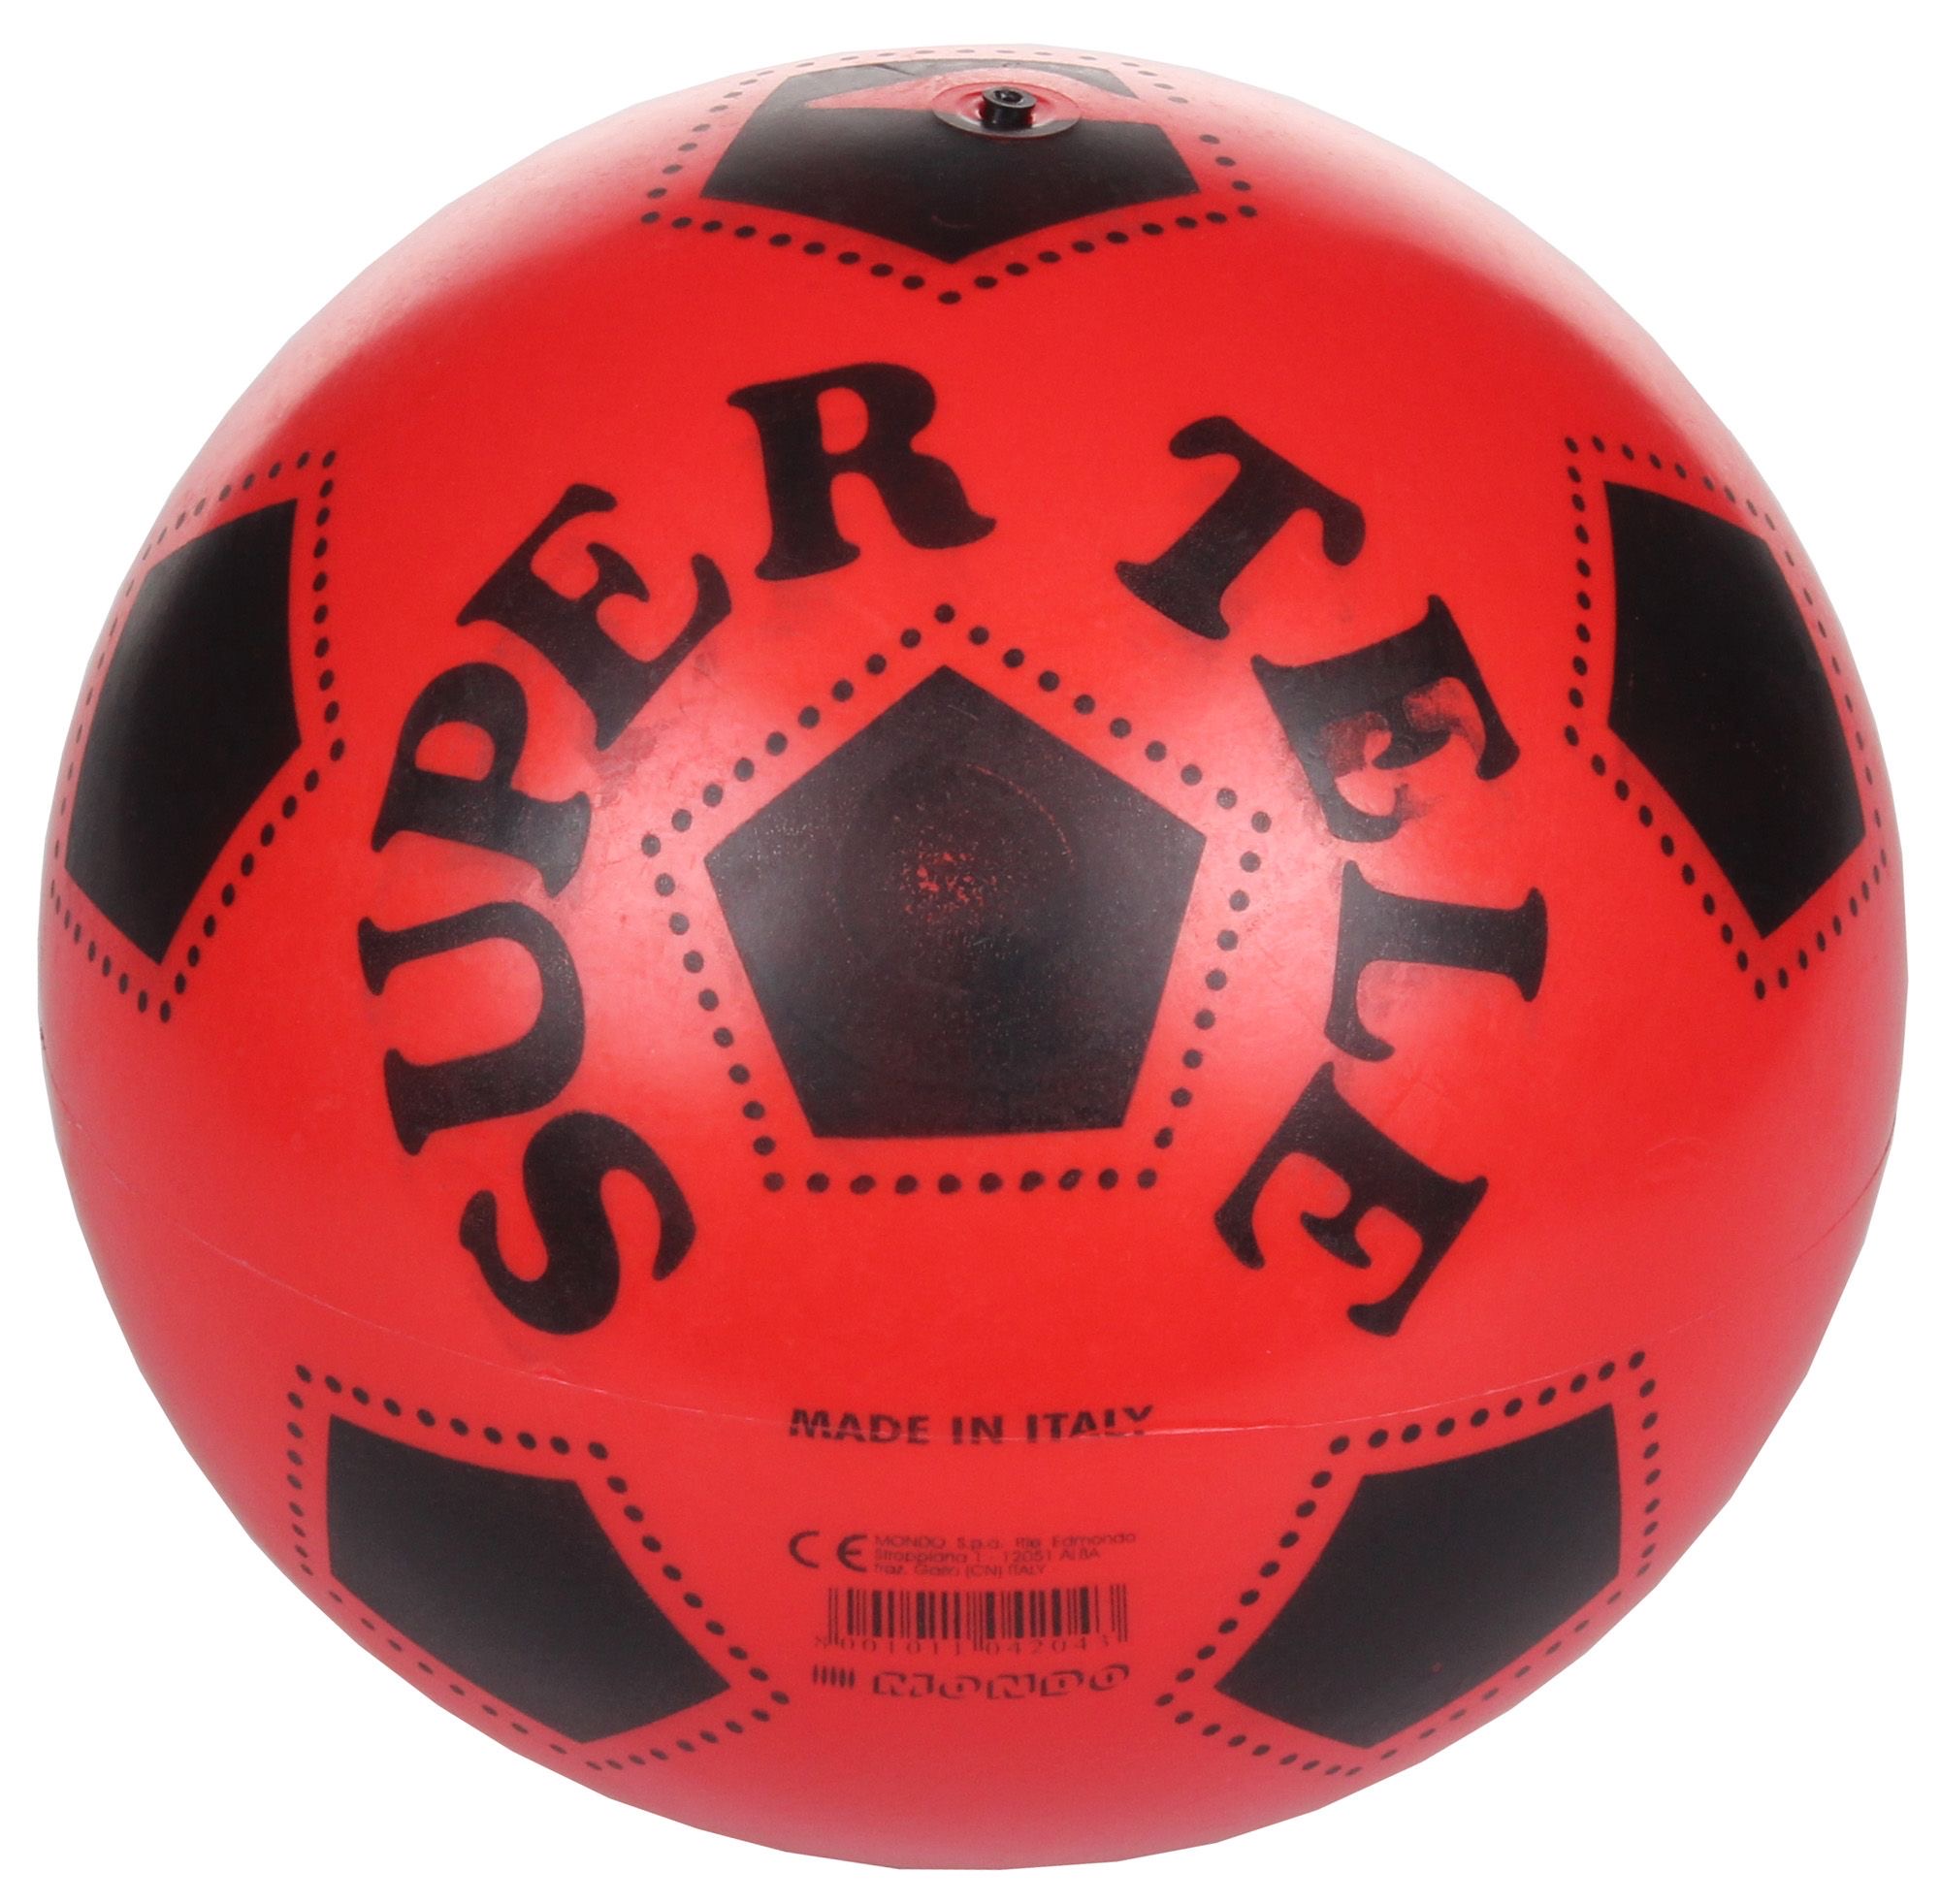 How do you make this ball (felele) stronger?